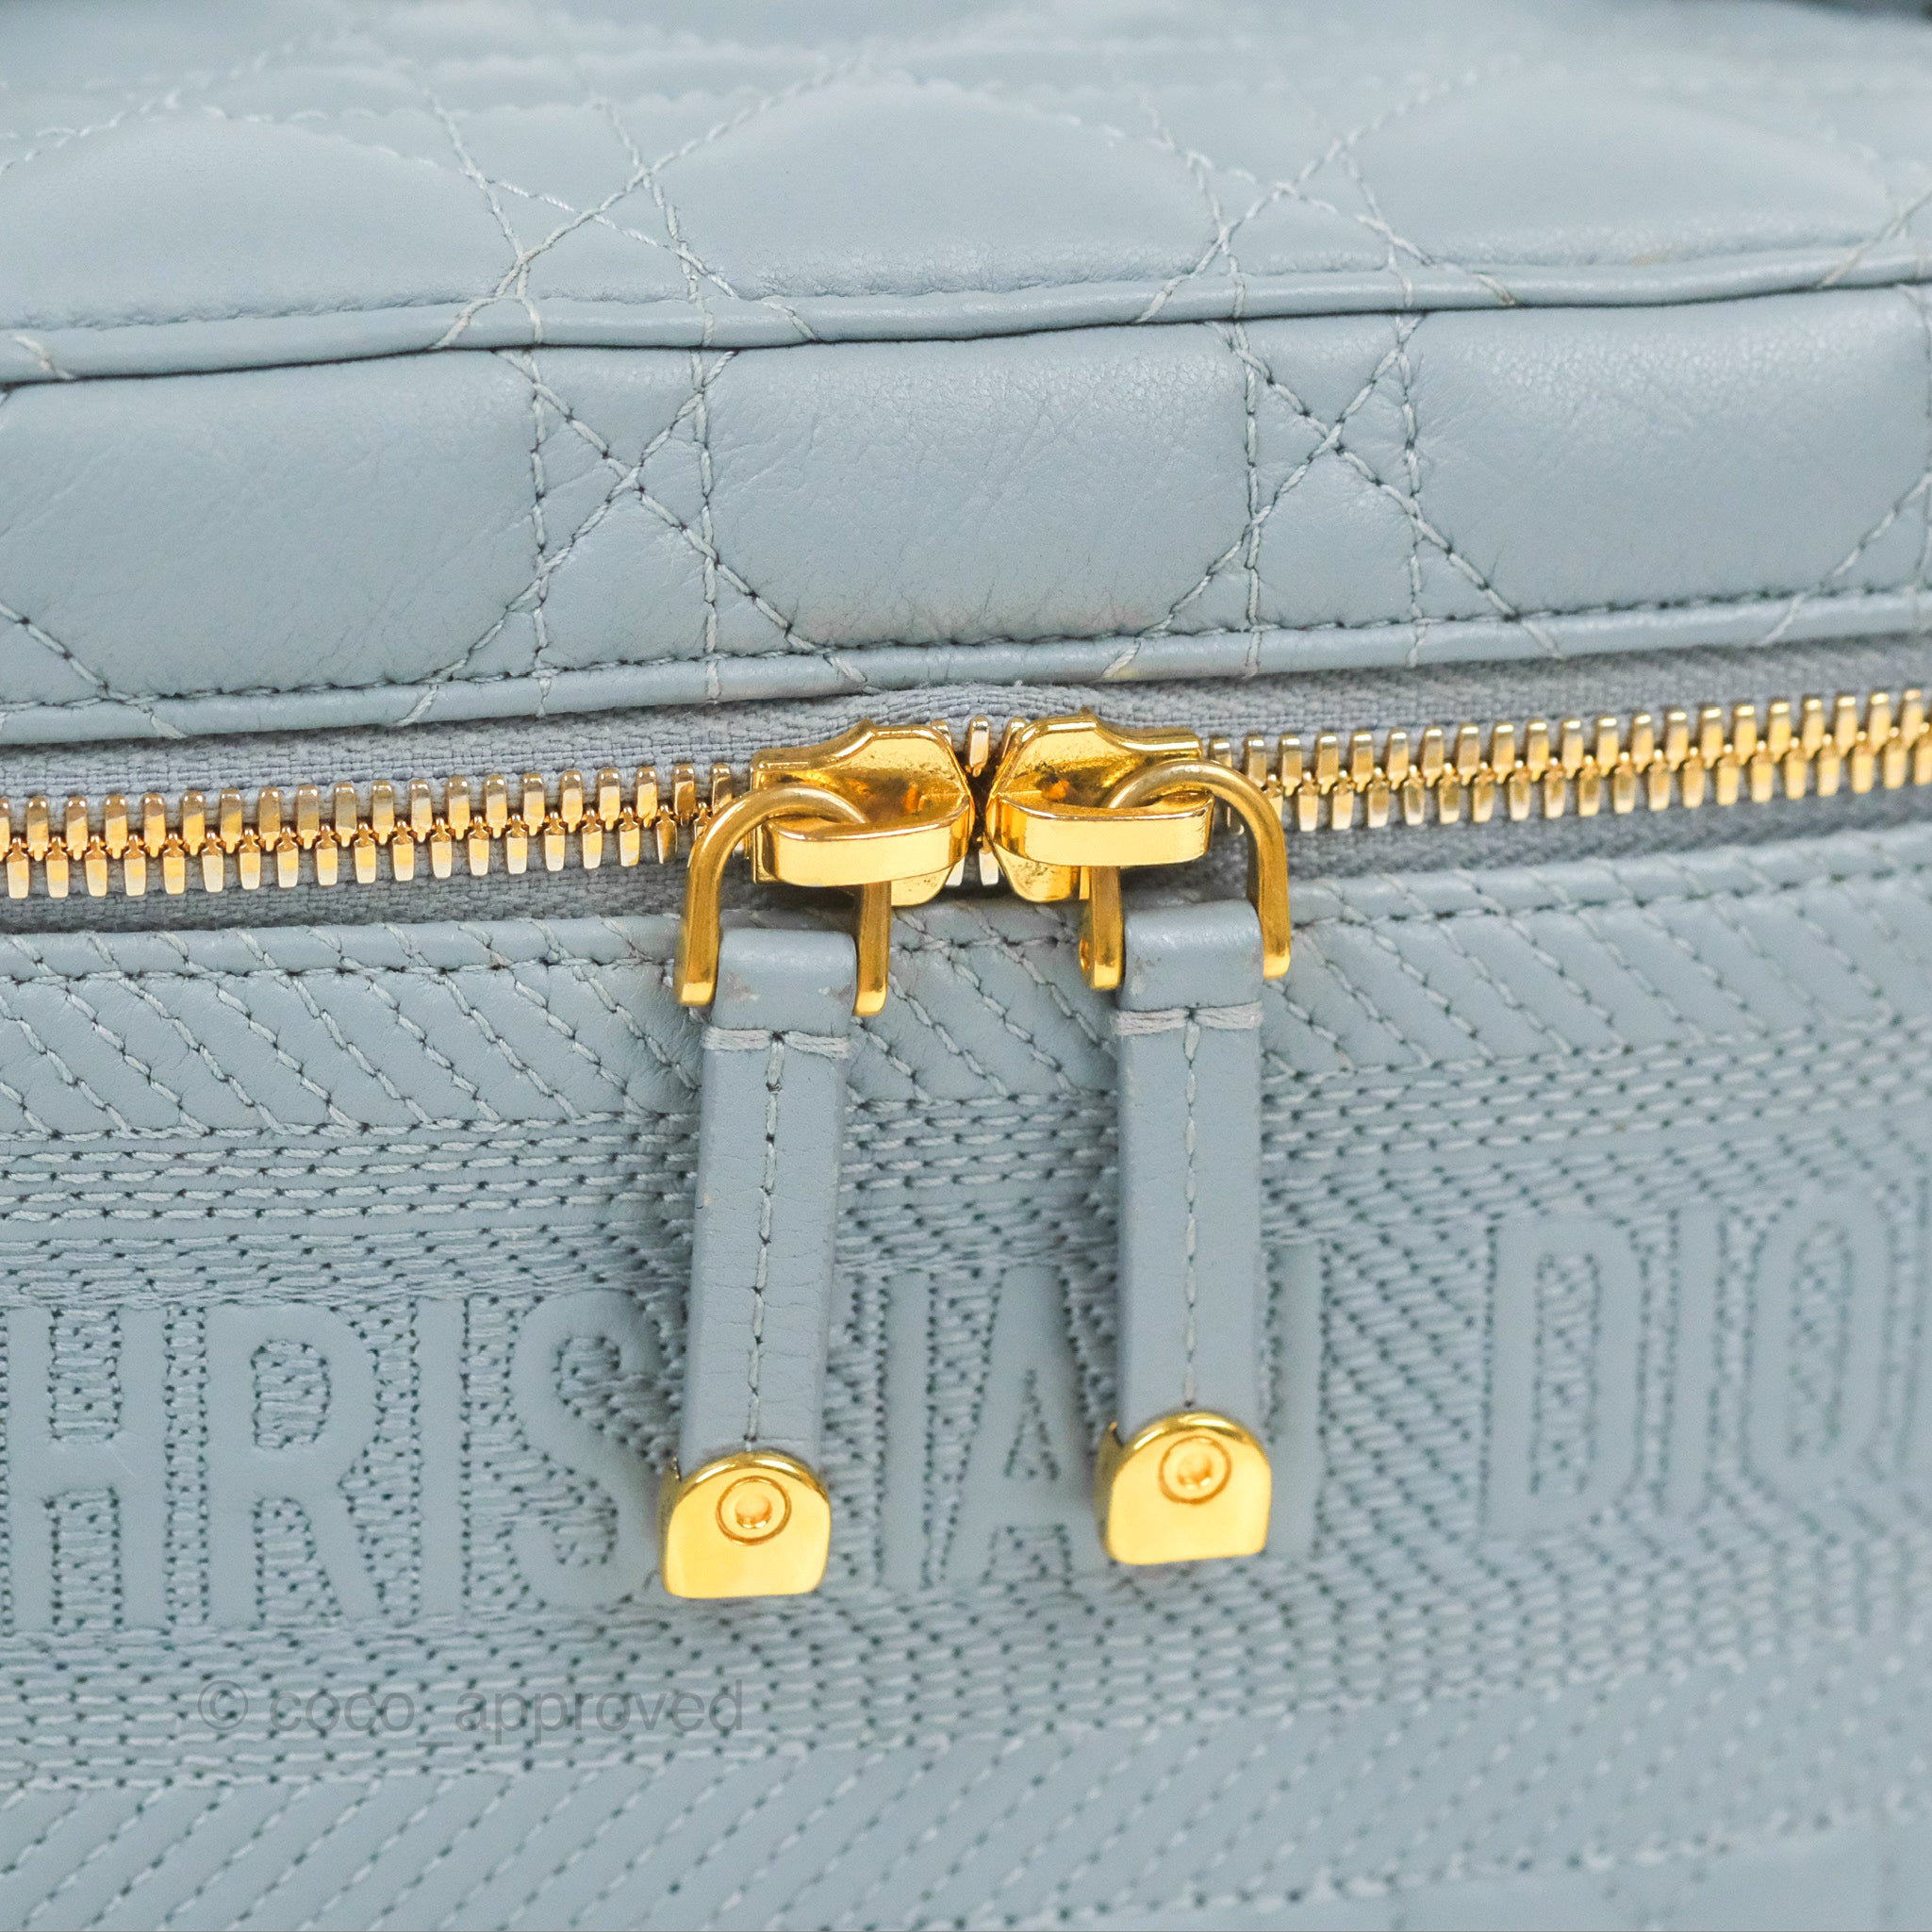 Christian Dior 2020 Small DiorTravel Vanity Case - Grey Handle